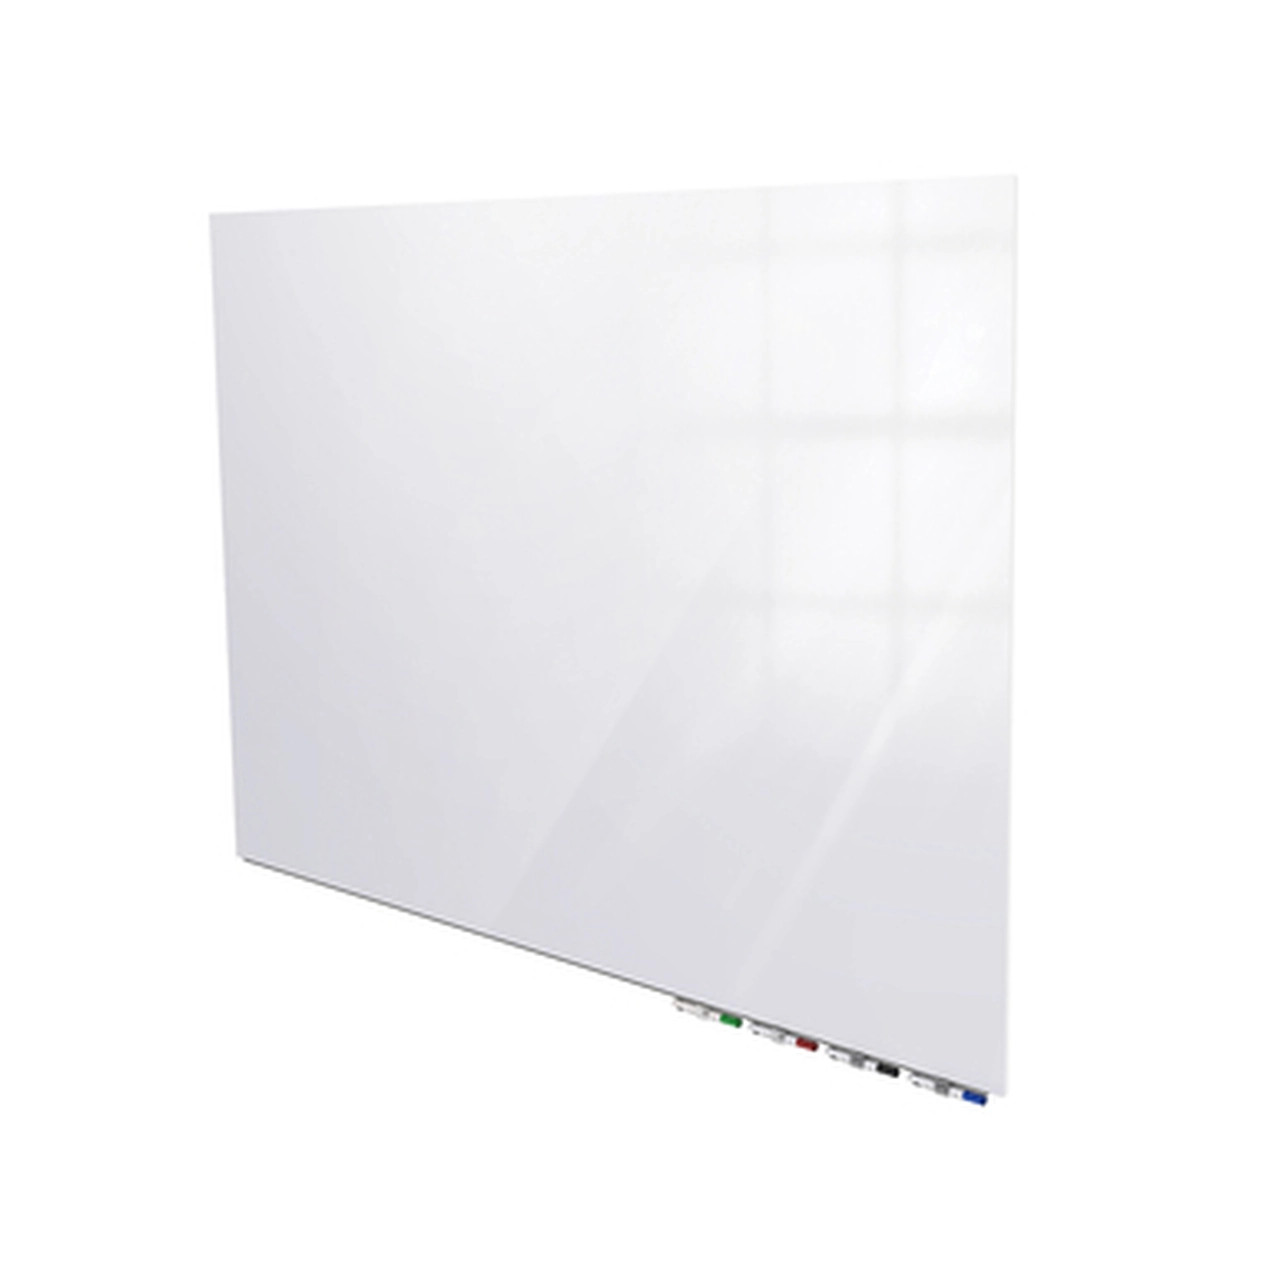 https://www.shifflerequip.com/ghent-aria-low-profile-non-magnetic-glass-whiteboard-2h-x-3w-white/